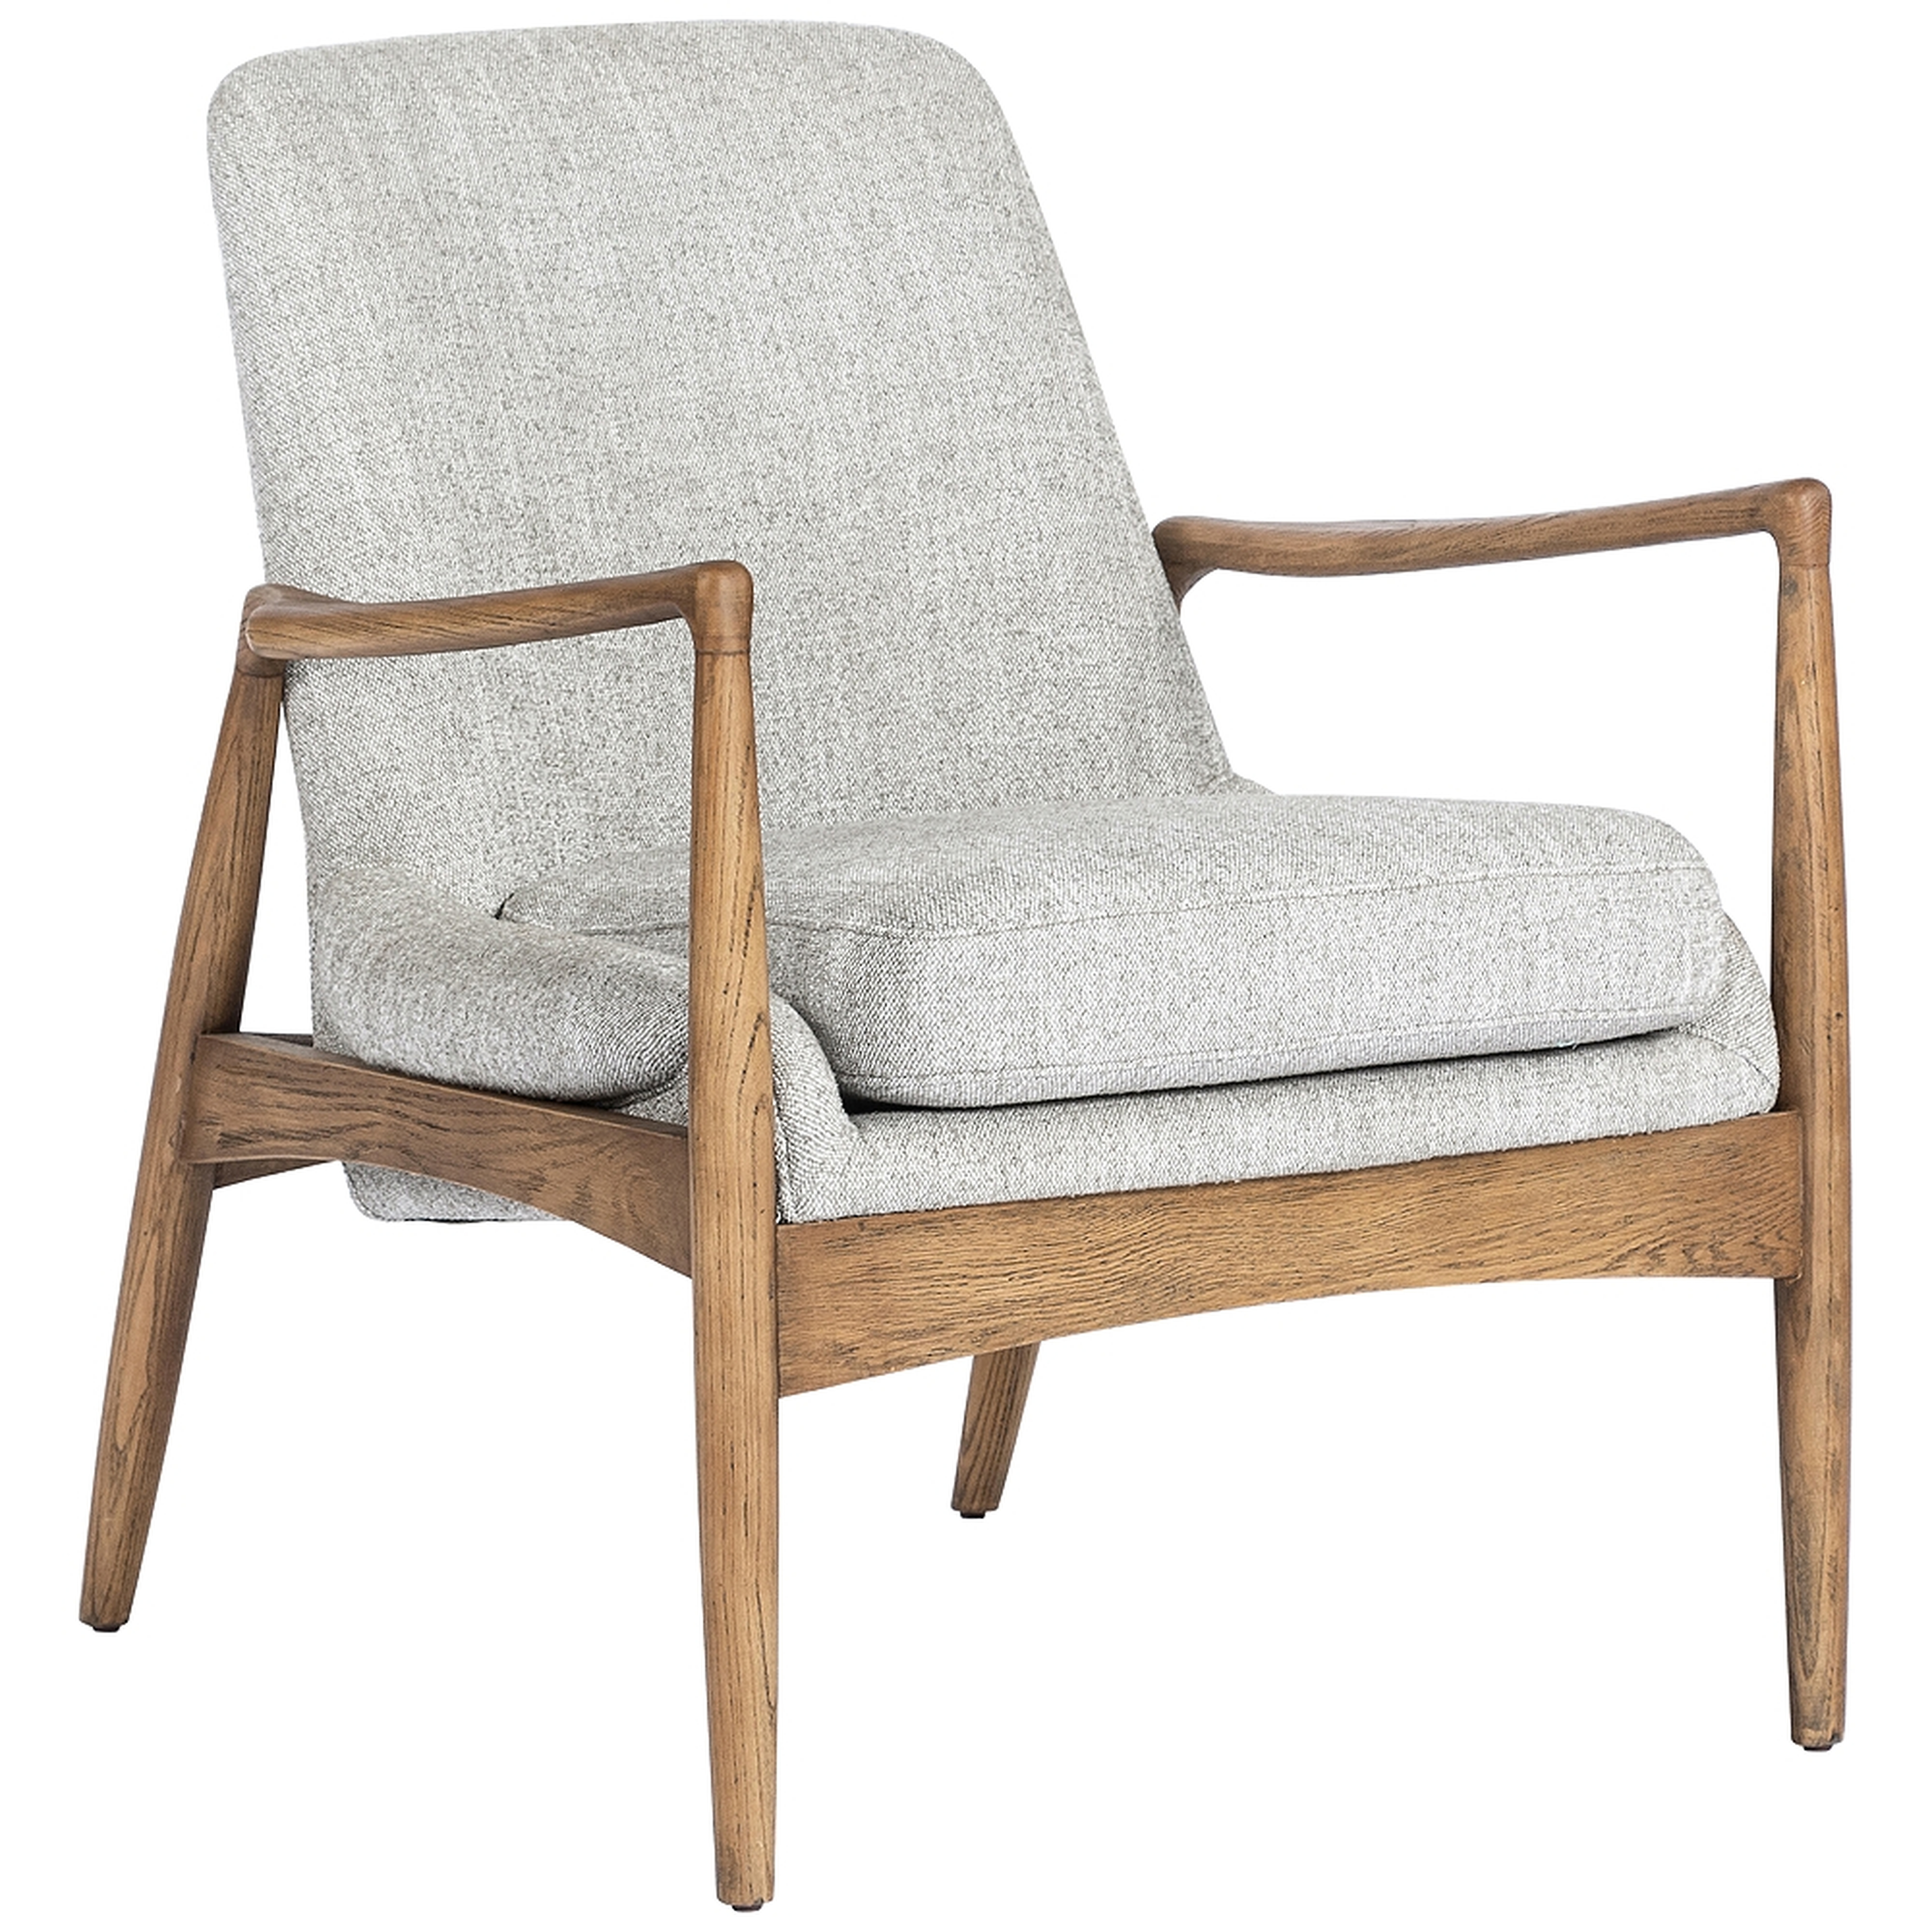 Braden Mid-Century Nettlewood Chair, Manor Gray - Lamps Plus